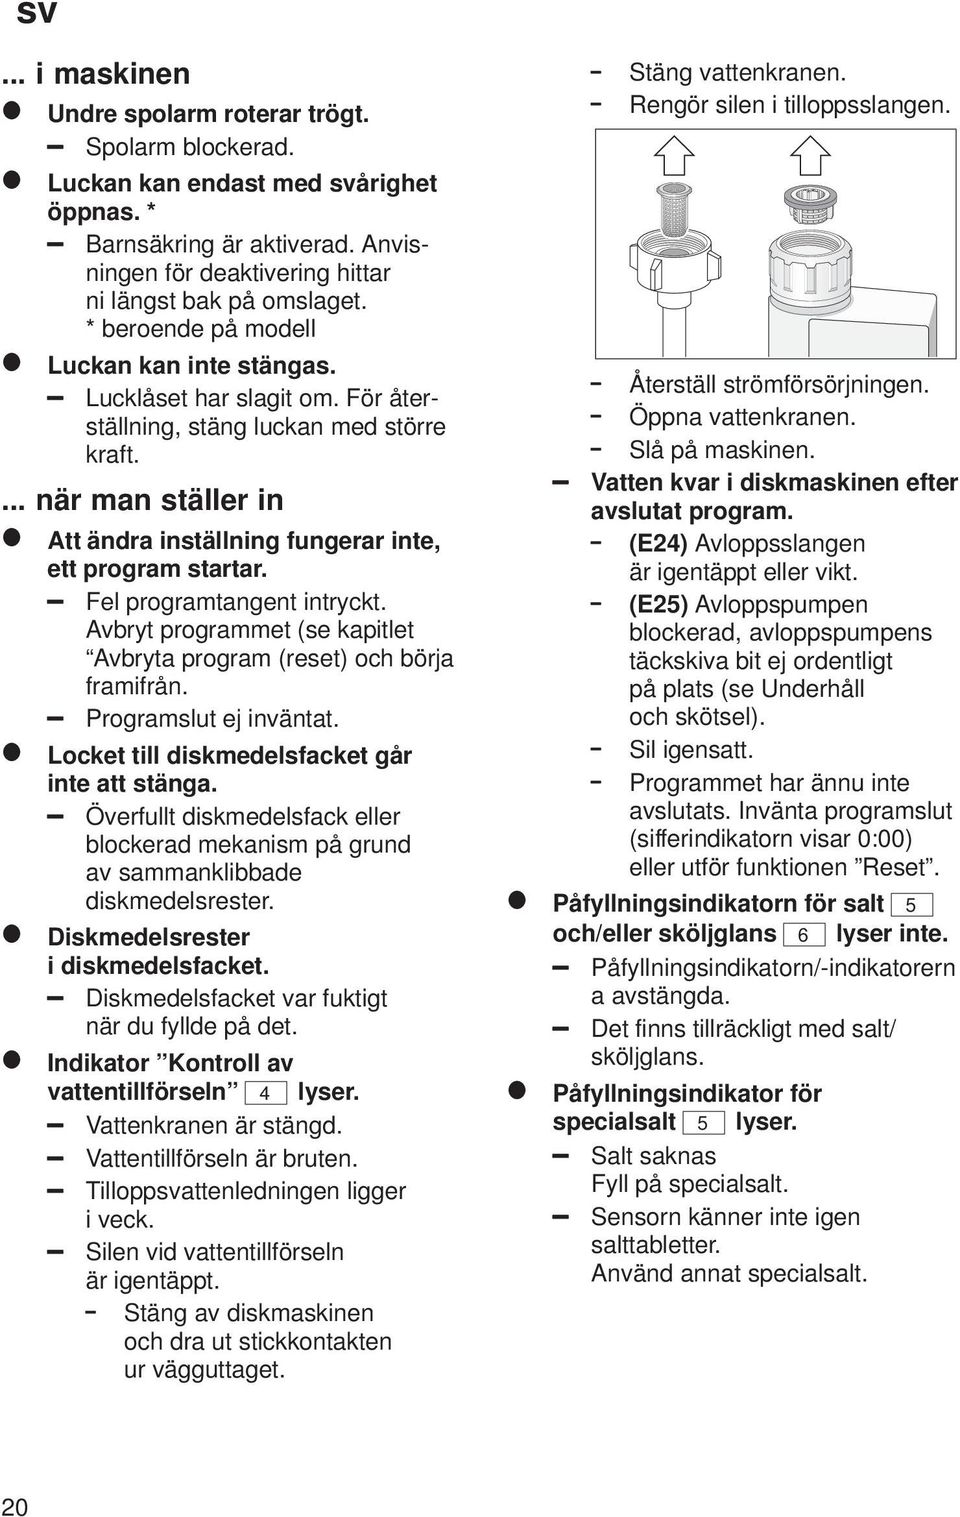 Diskmaskin. sv Bruksanvisning - PDF Gratis nedladdning